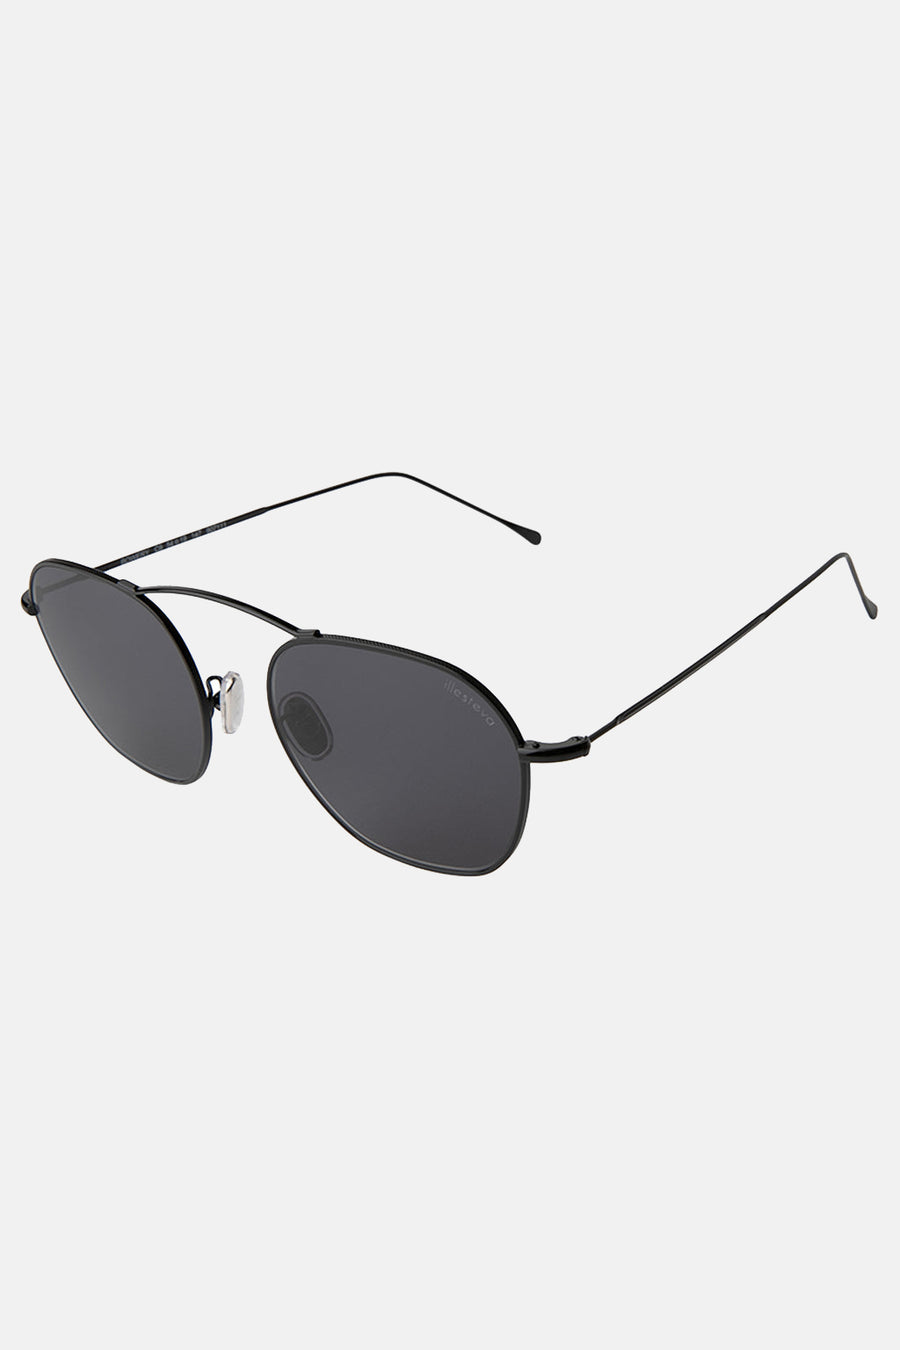 Bowery 54 Sunglasses Black/Grey Flat - blueandcream